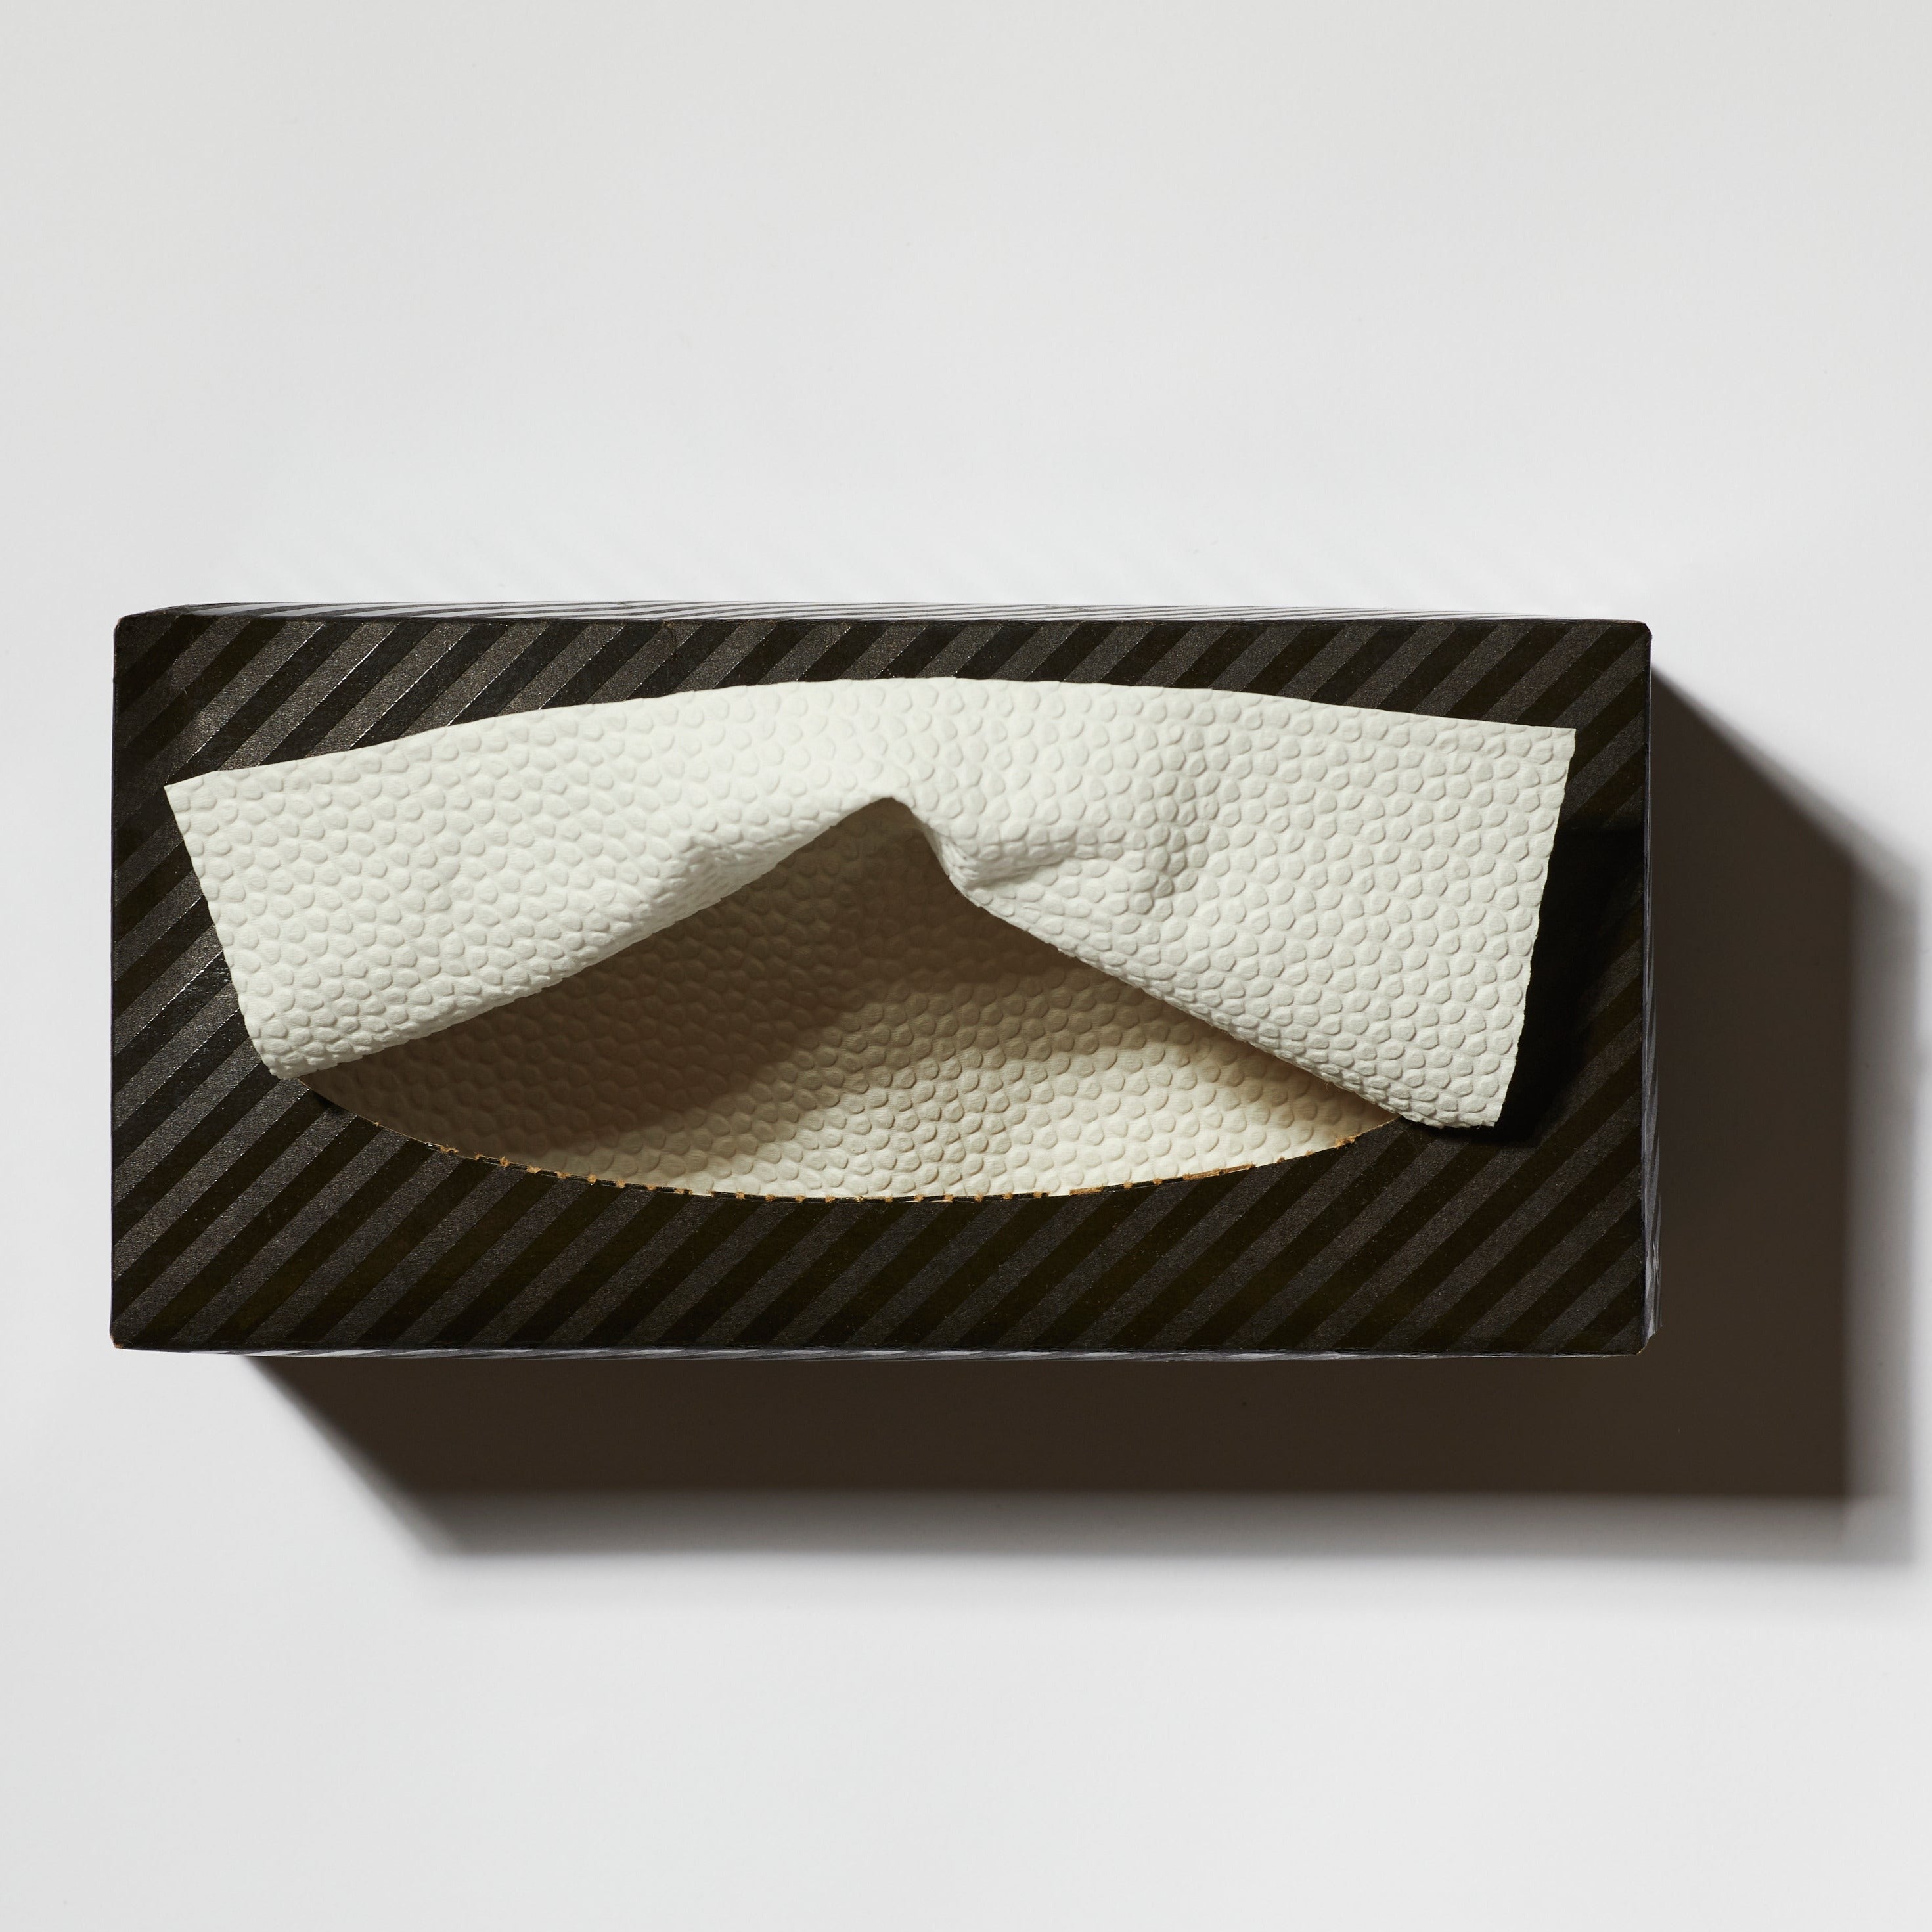 Napkin Towel Boxes - BOXES OF 24